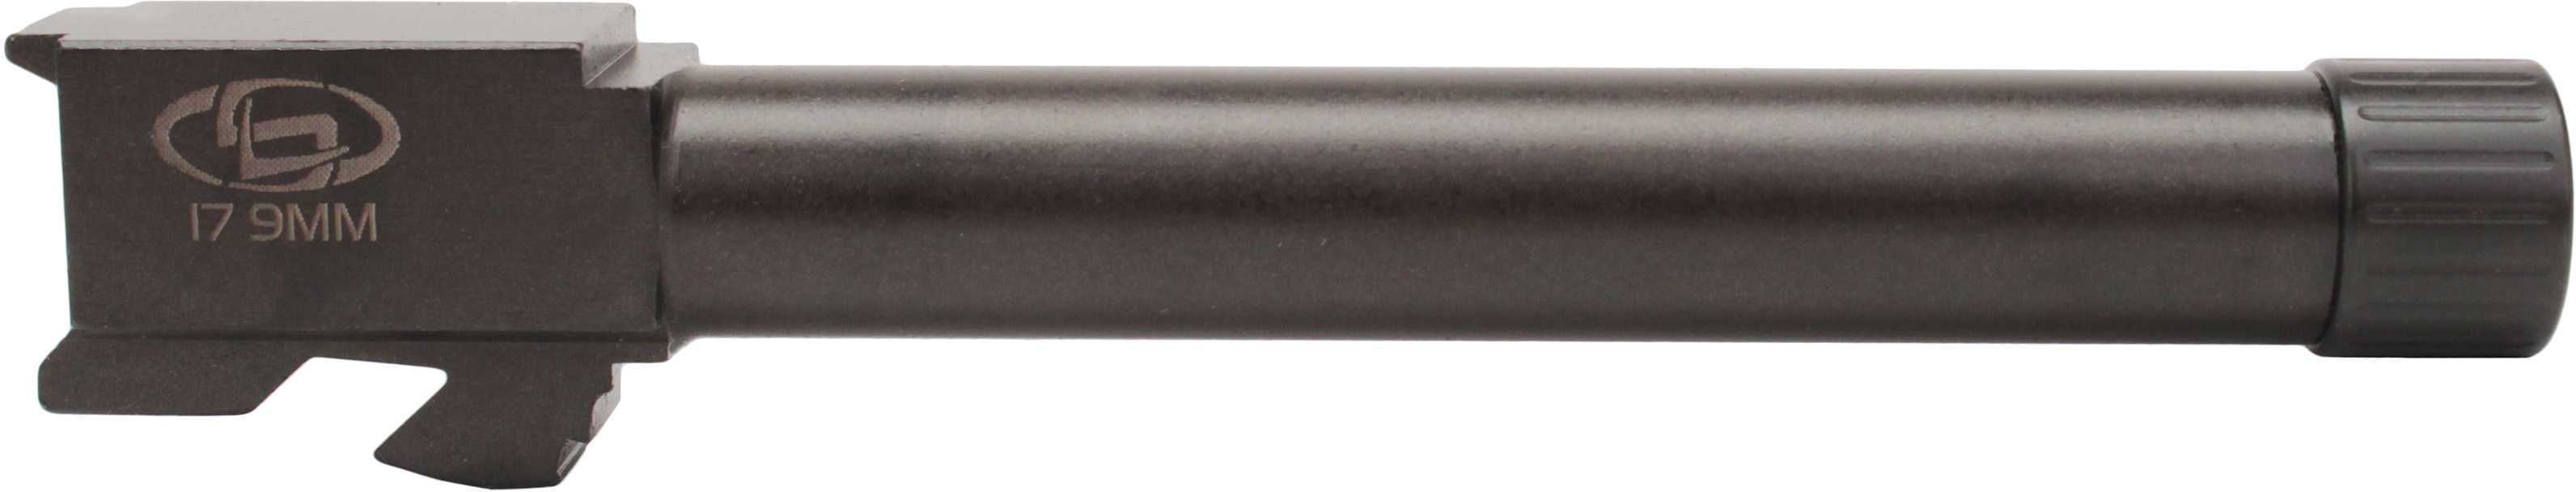 StormLake Barrels Lake 9MM 5.19" Fits Glock 17 Black Isonite QPQ Finish 1/2-28 Thread with Prote 34003